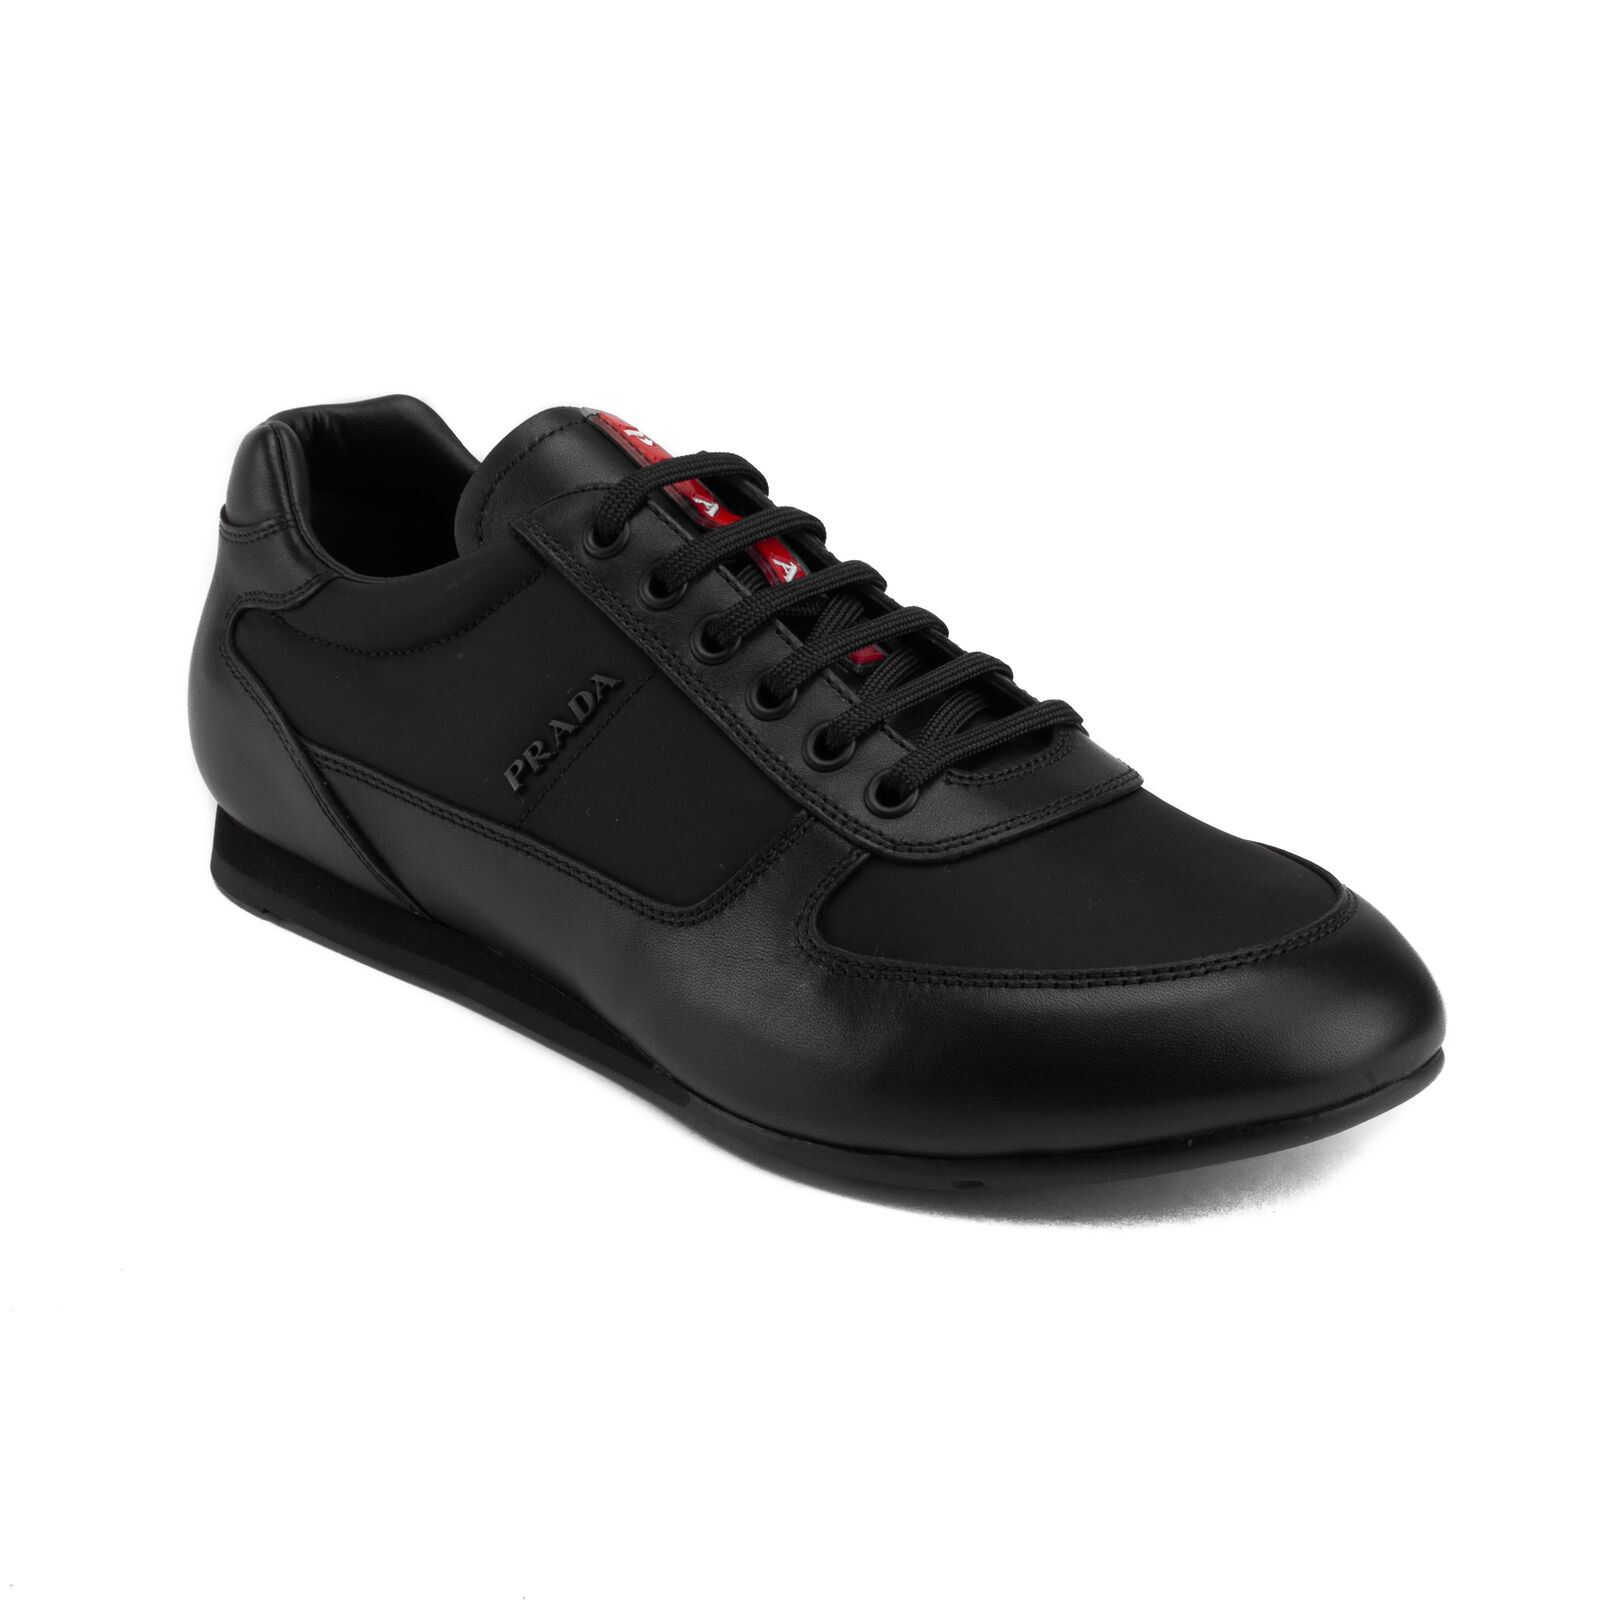 Sneaker Watch : Prada Men's Leather Low-Top Sneaker Shoes Black